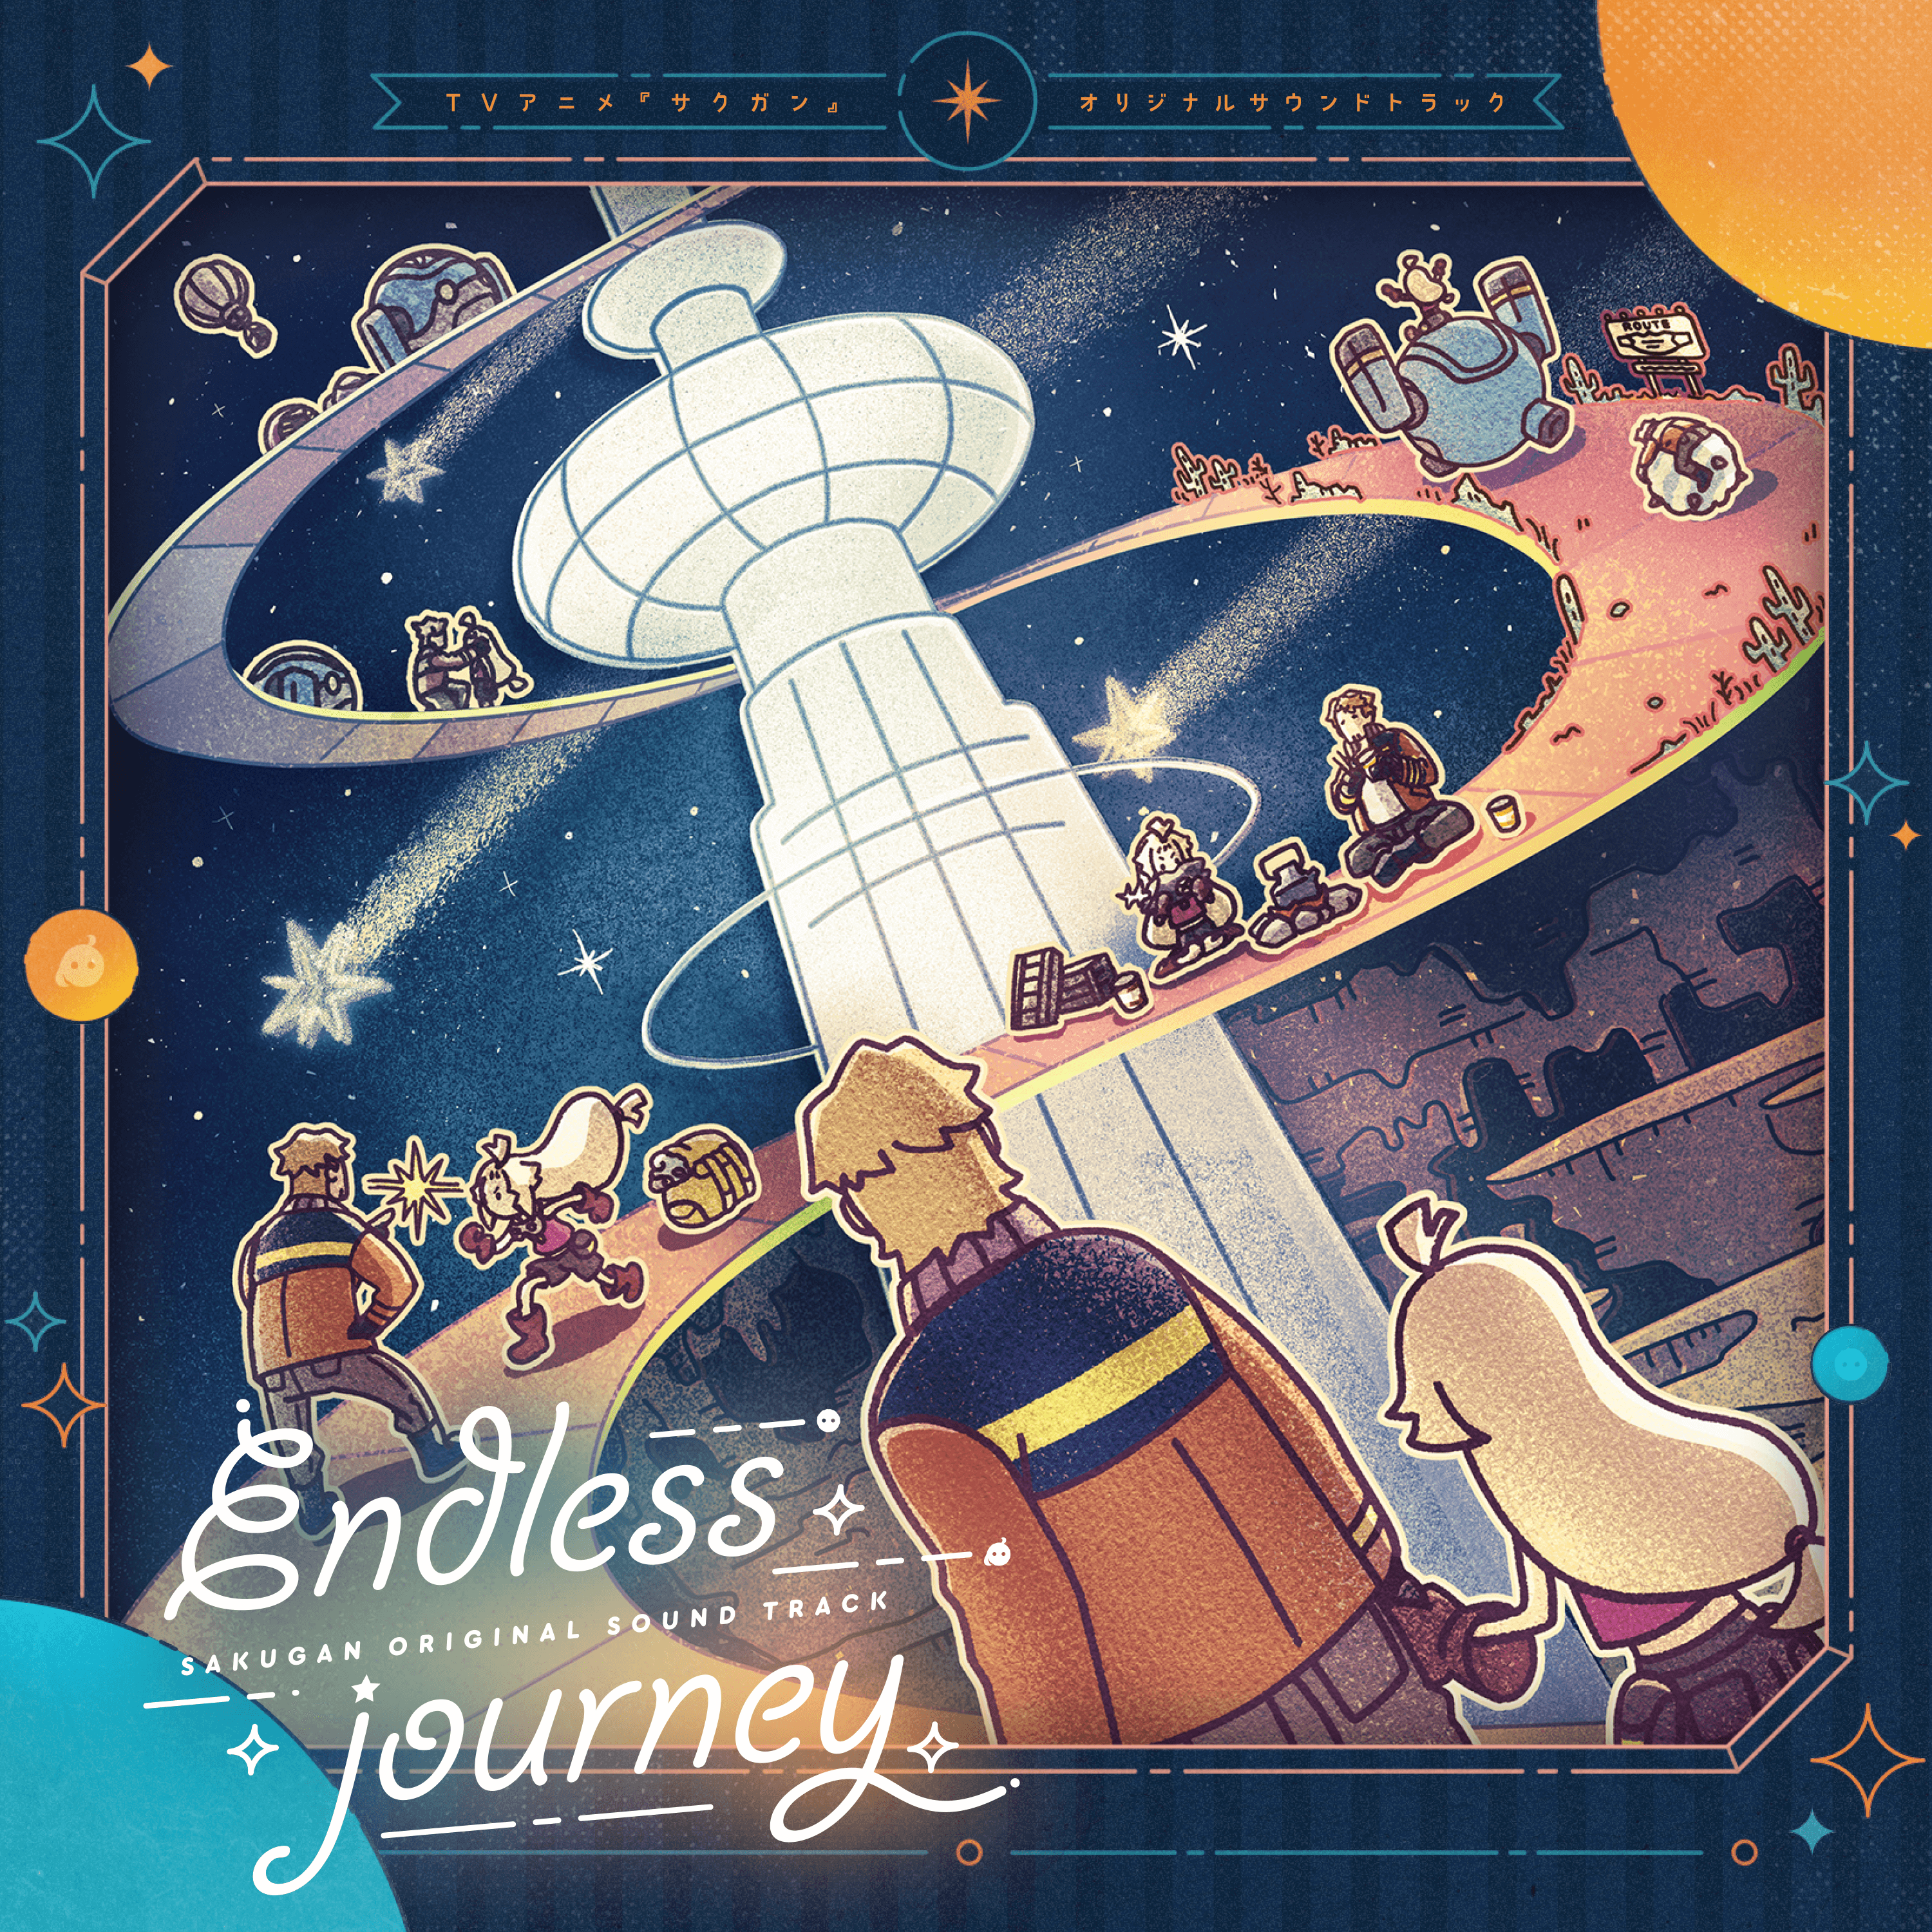 TVアニメ『サクガン』 オリジナルサウンドトラック「Endless journey」ジャケ写、INDEX、試聴動画が一挙解禁！